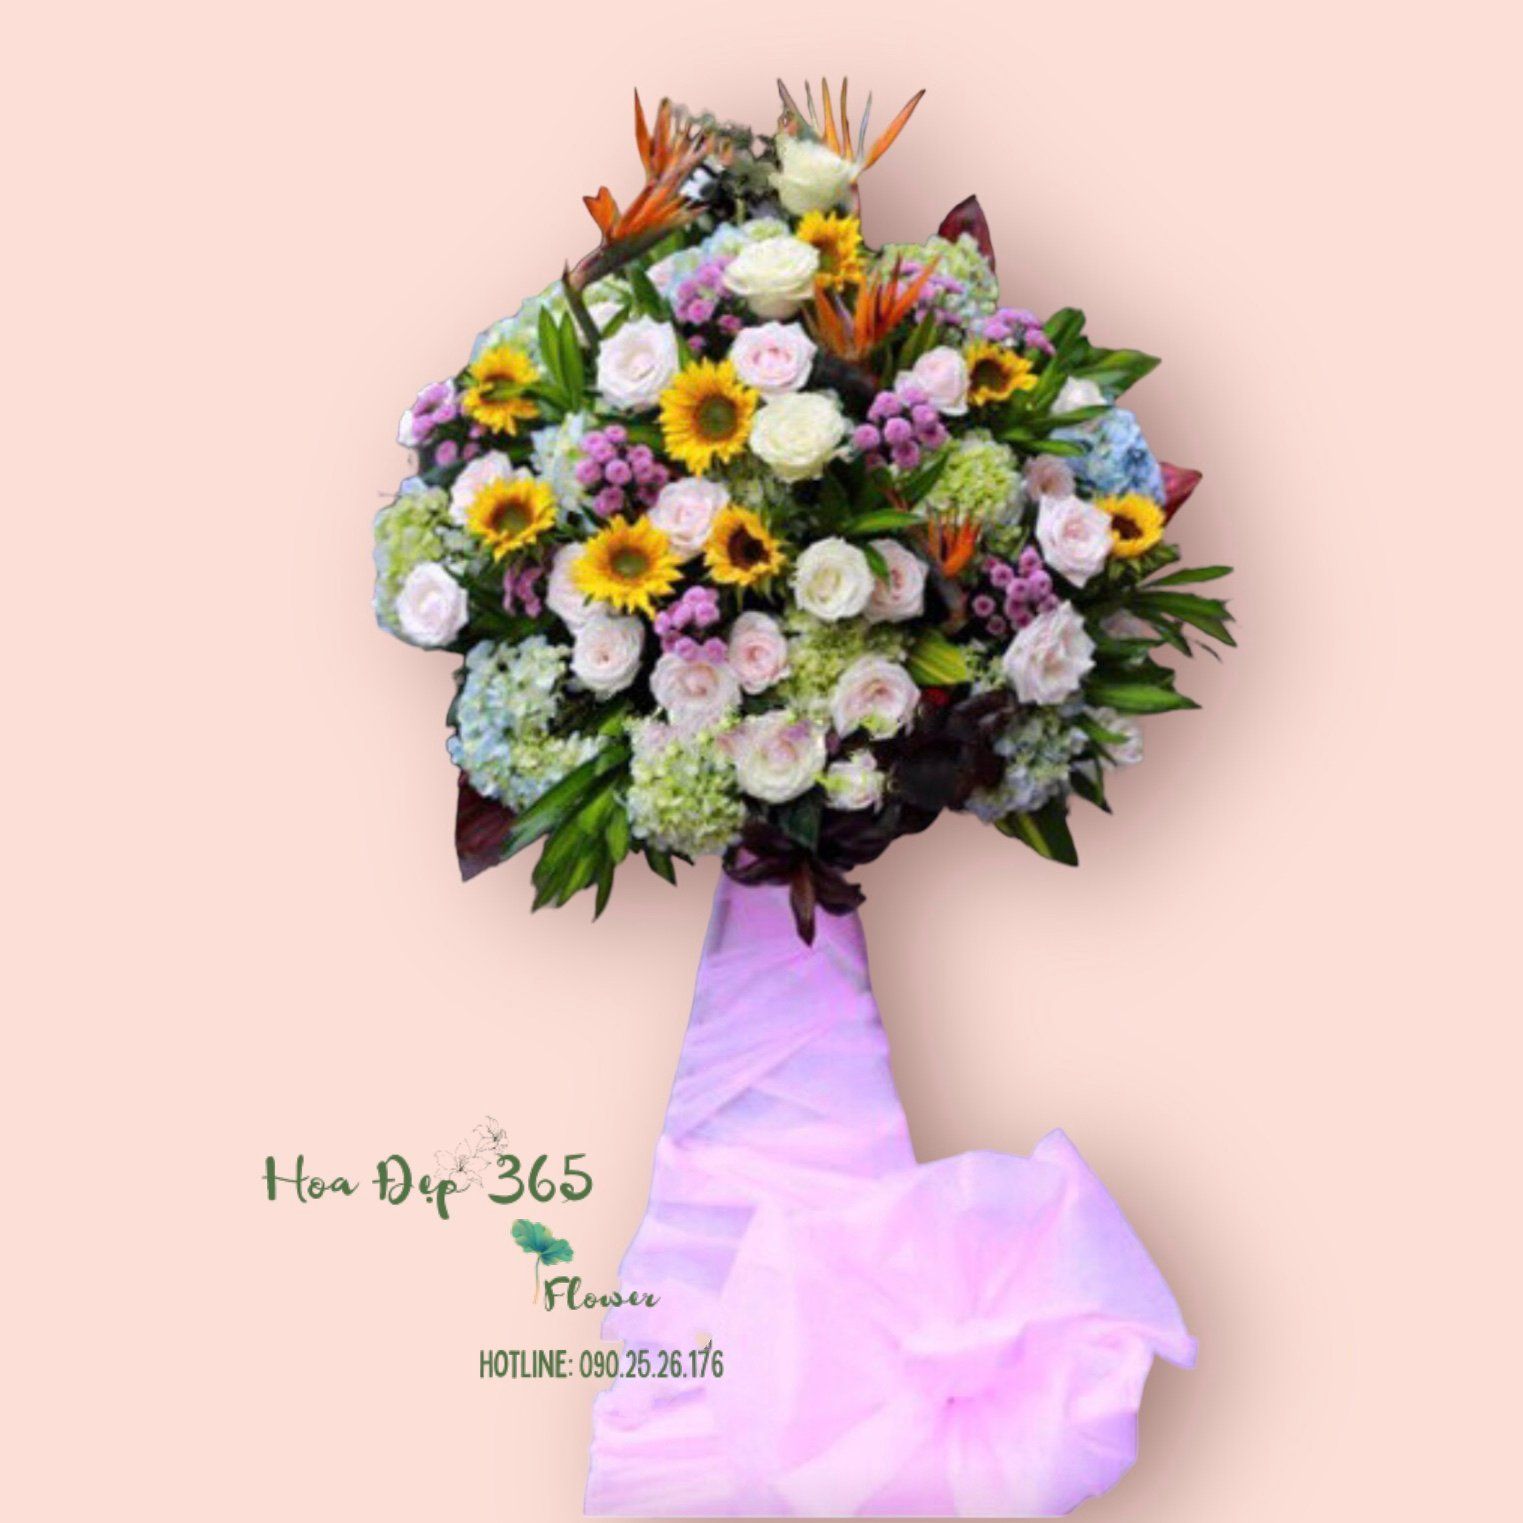  Best Wishes - HCM40 - Lẵng Hoa Khai Trương 